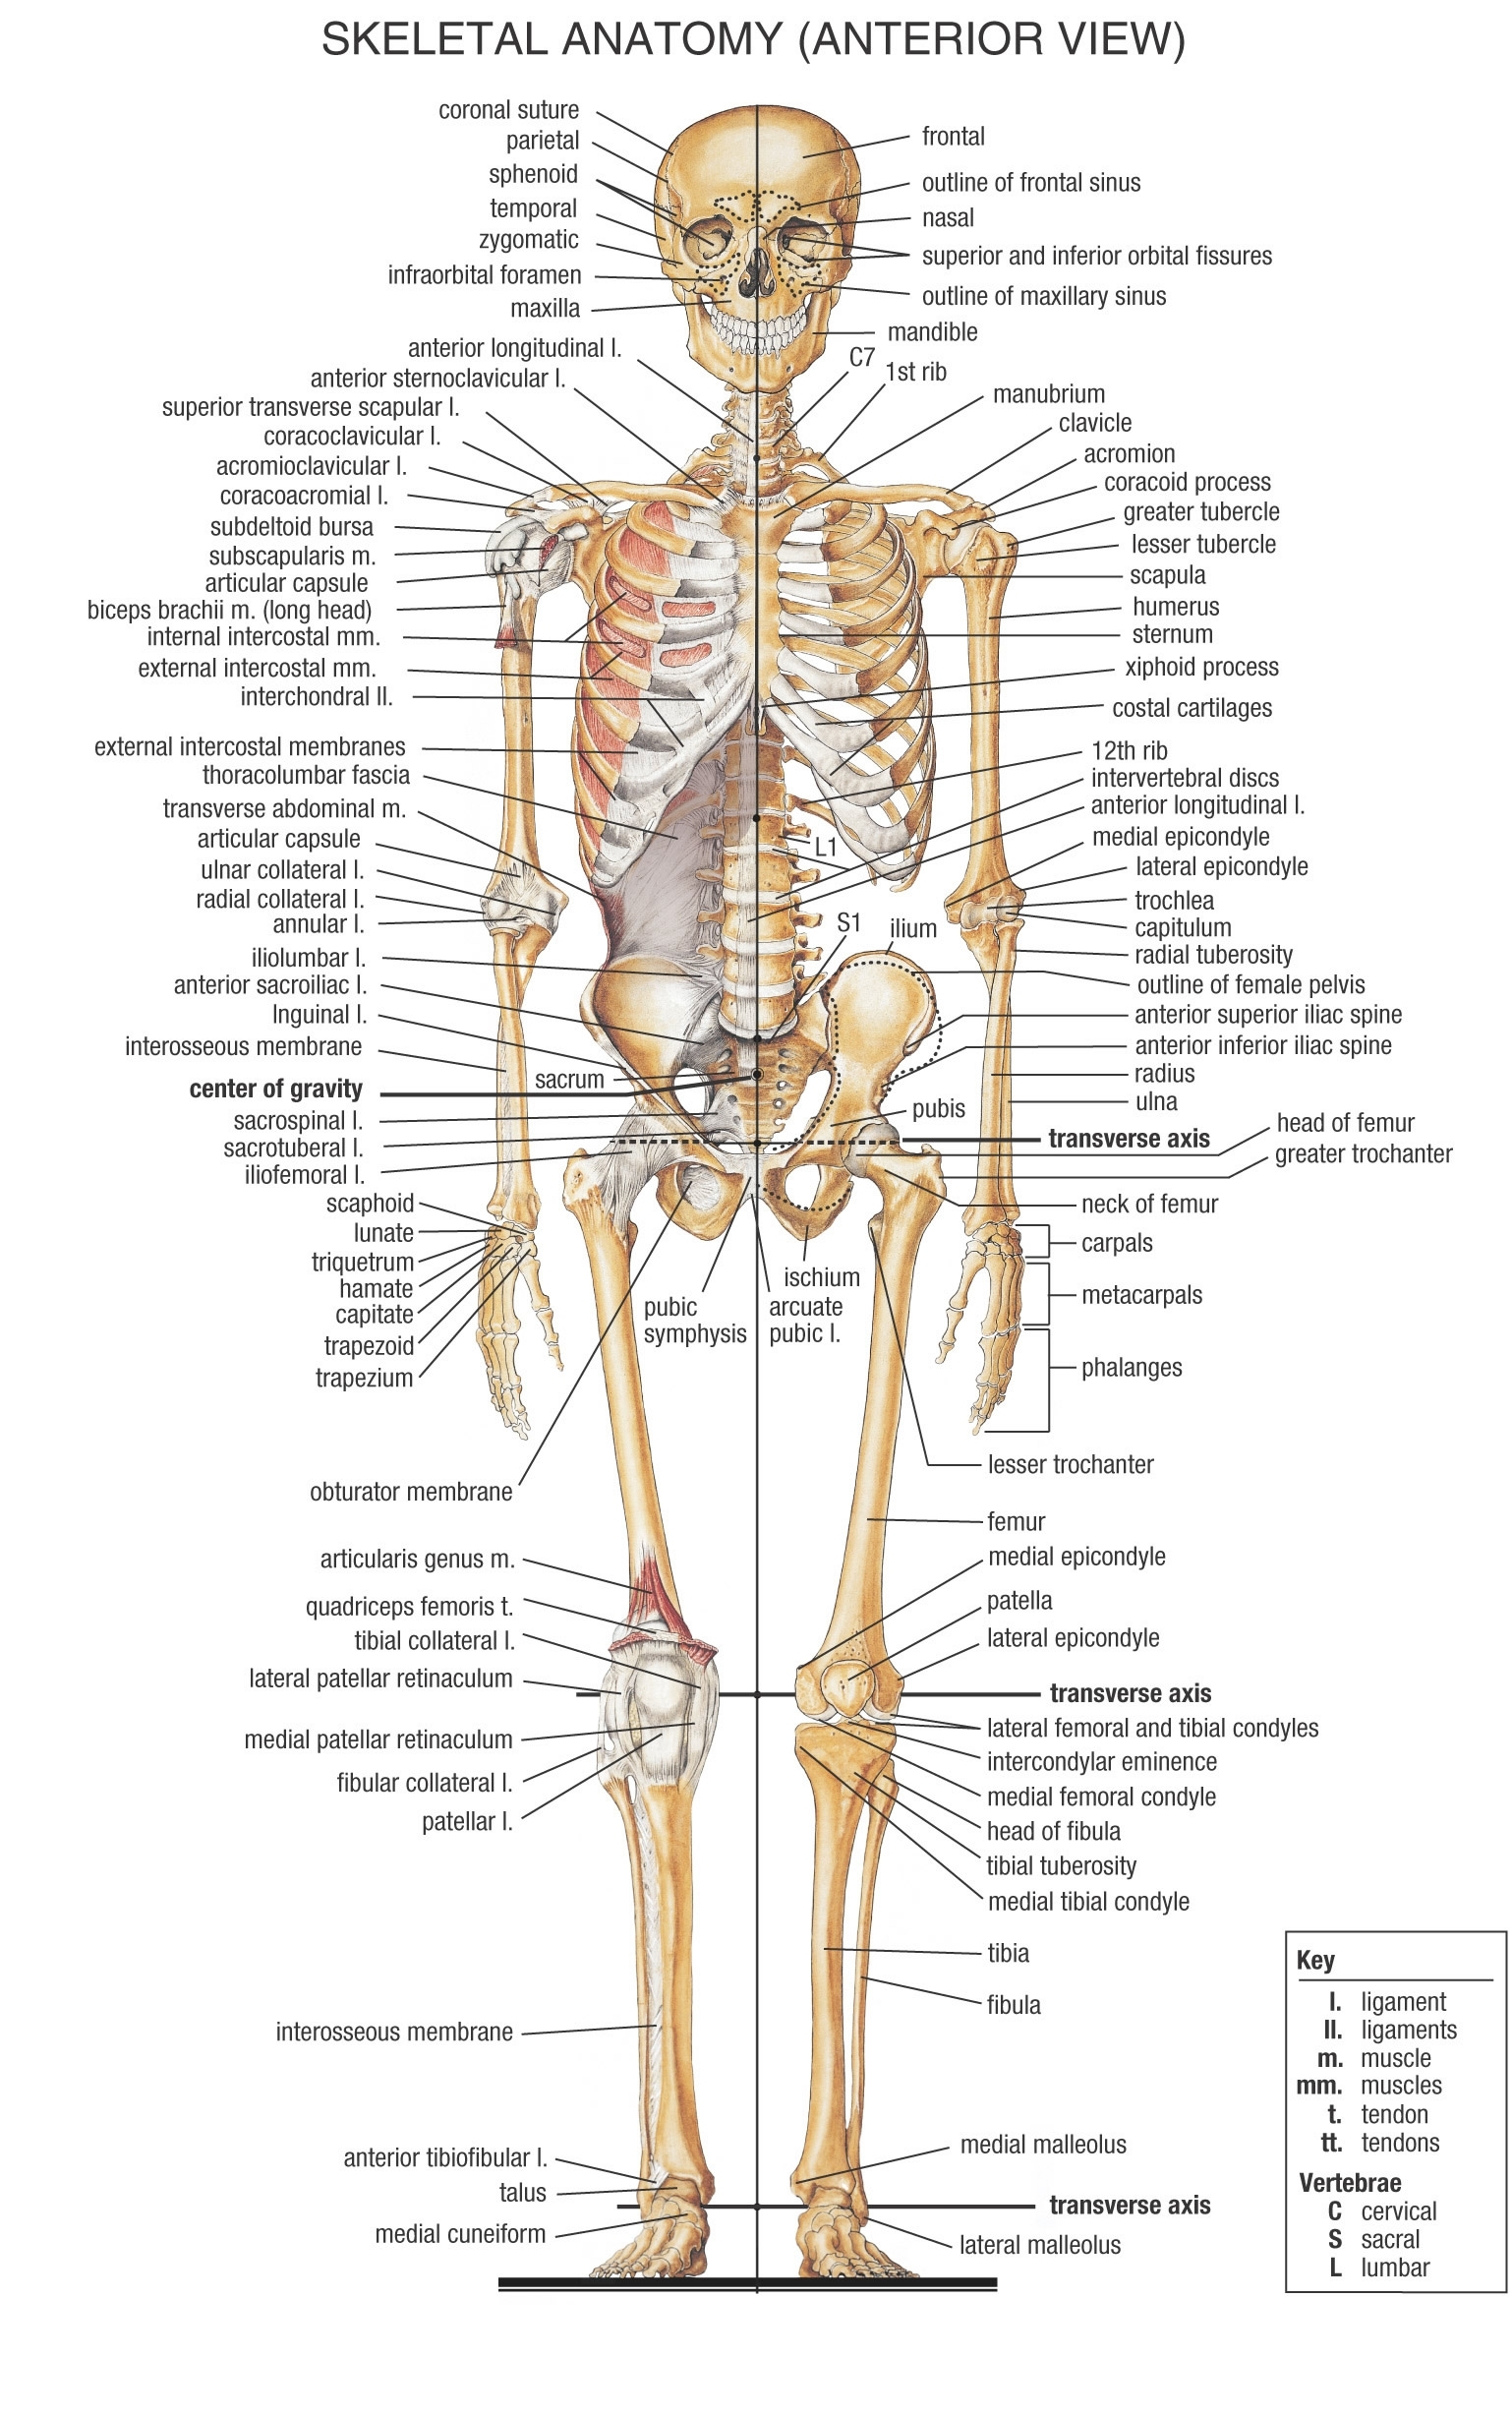  Desktop Wallpapers on Anatomy Human Body Art Bones Hd Wallpaper   Art   Fantasy   255526